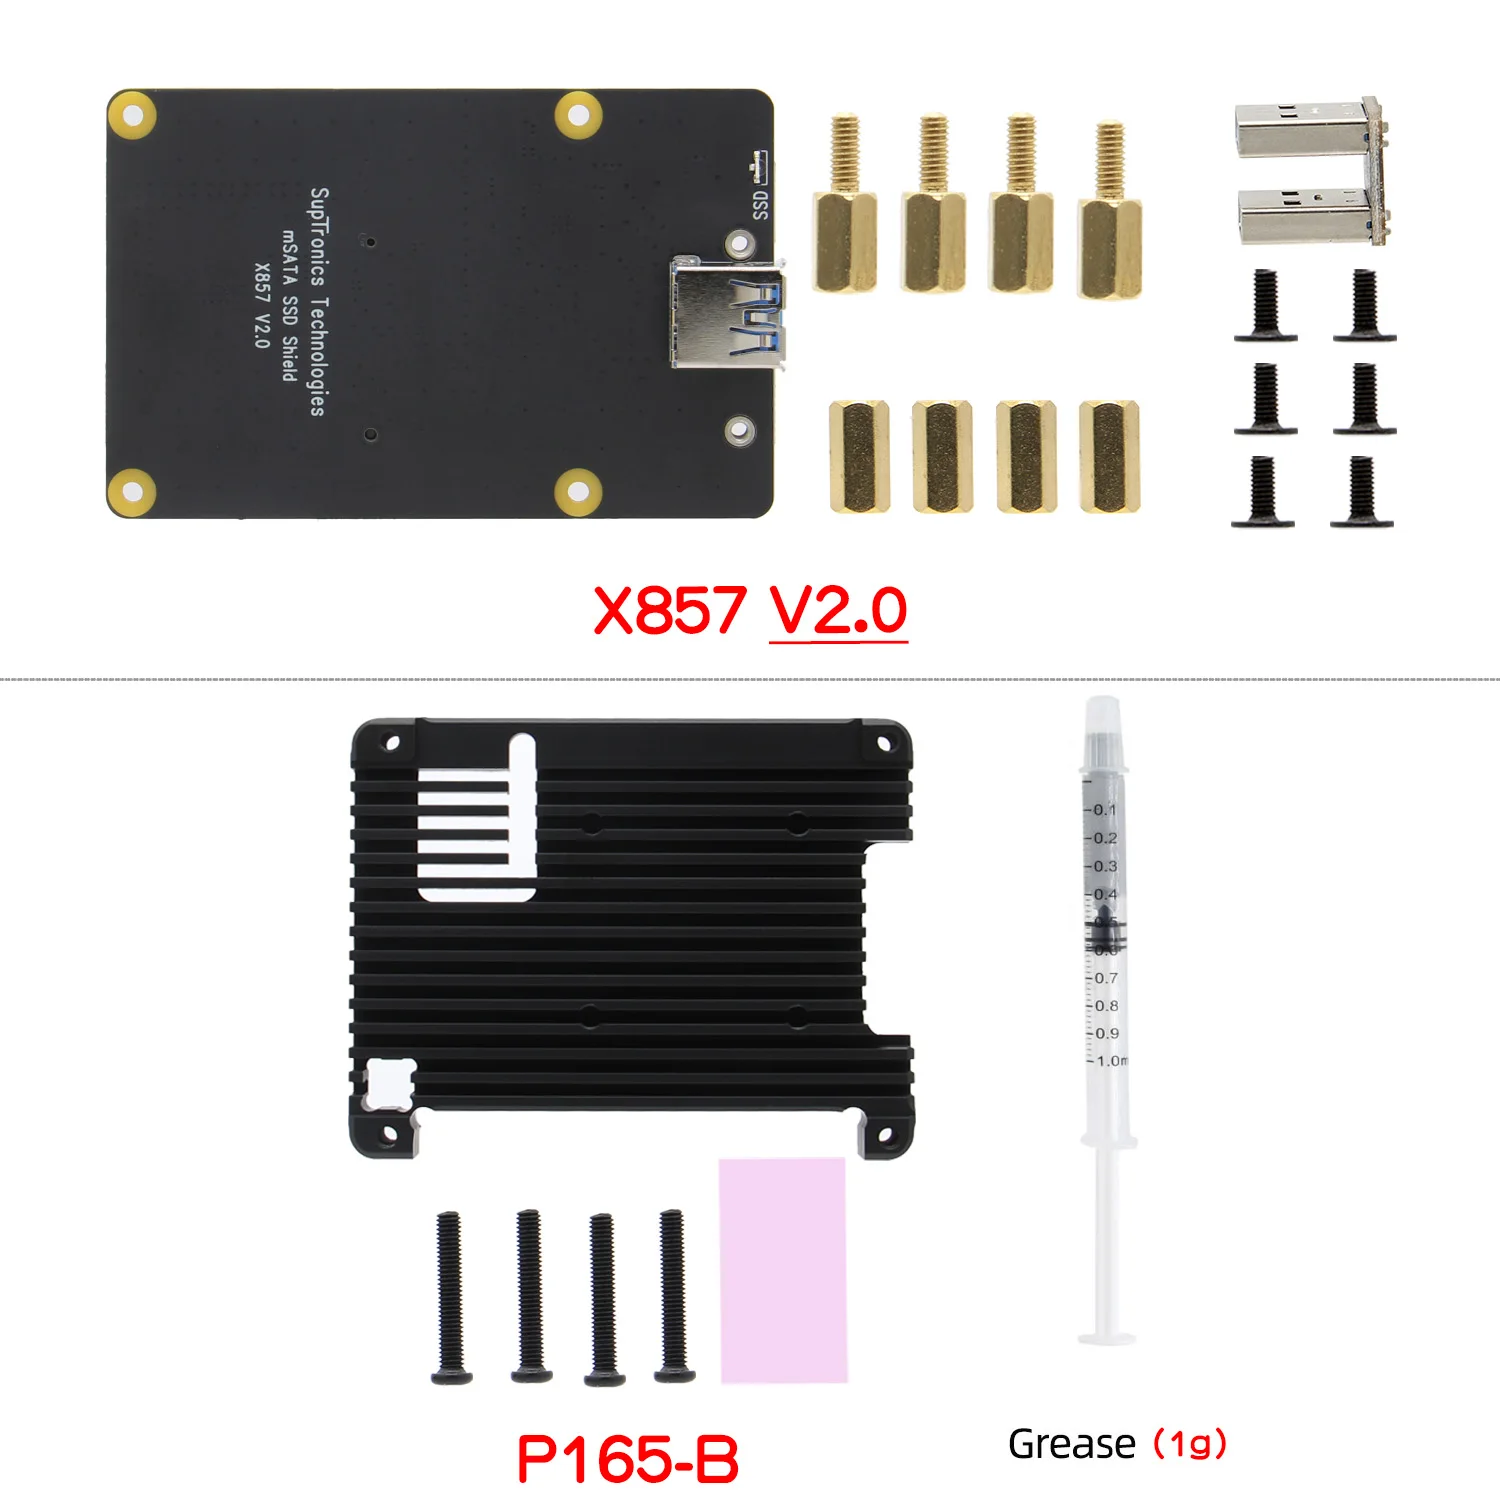 Raspberry Pi 4 Model B mSATA SSD Storage Expansion Board, X857 V2.0 S –  Lonten Technology